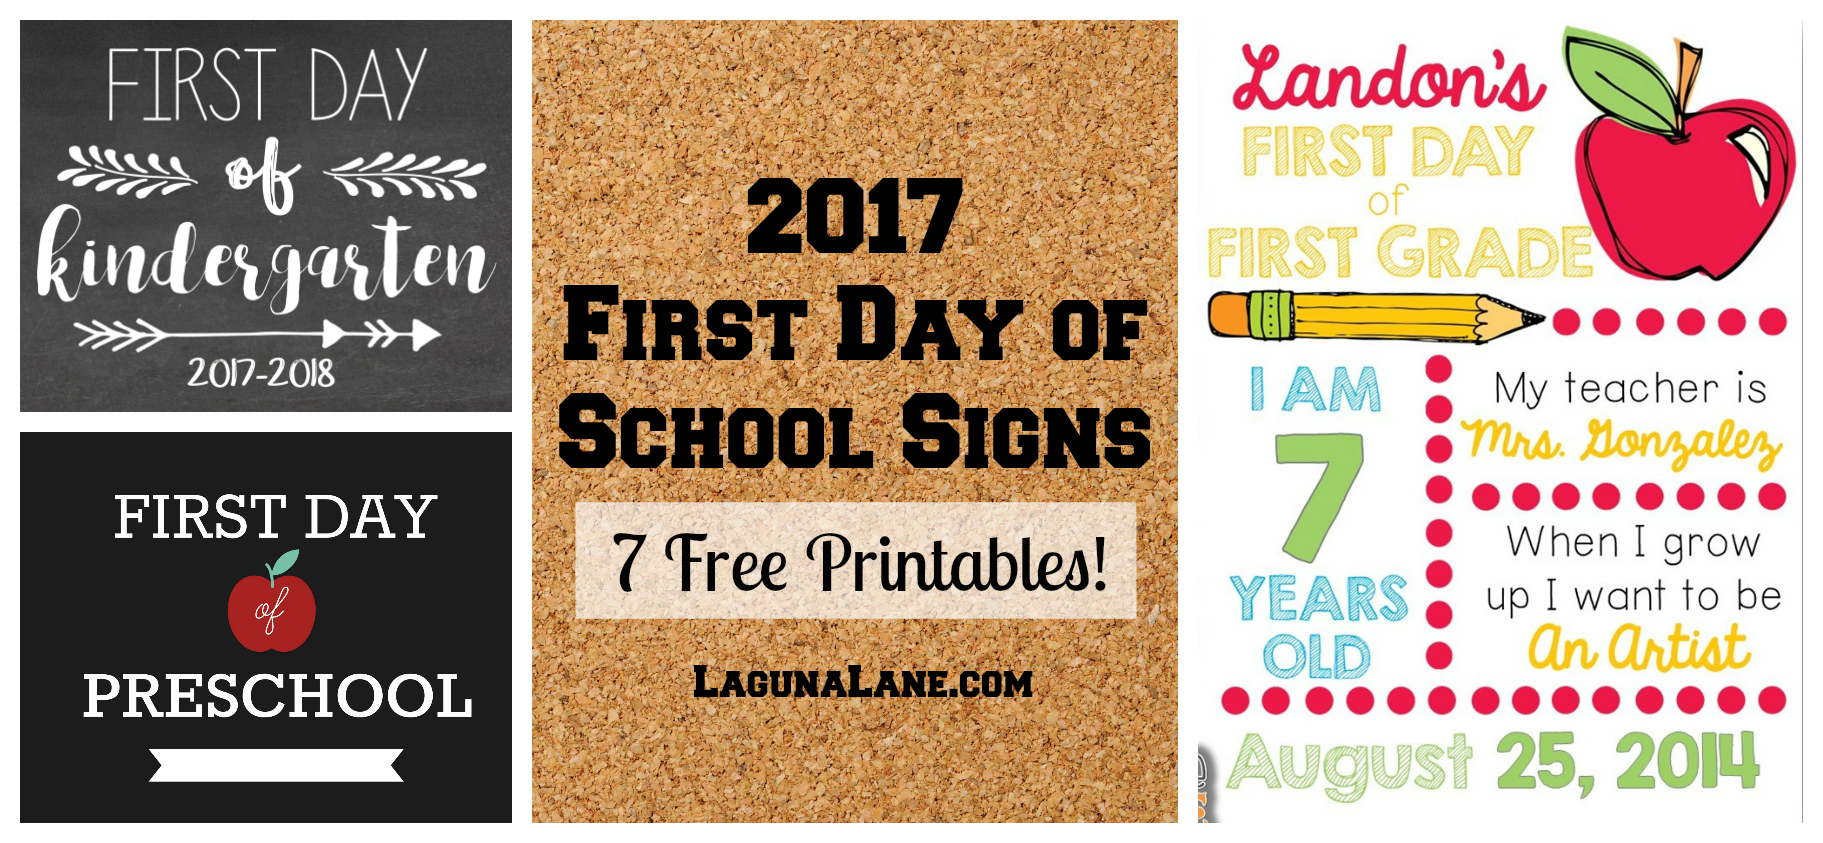 First Day of School Free Printables LagunaLane